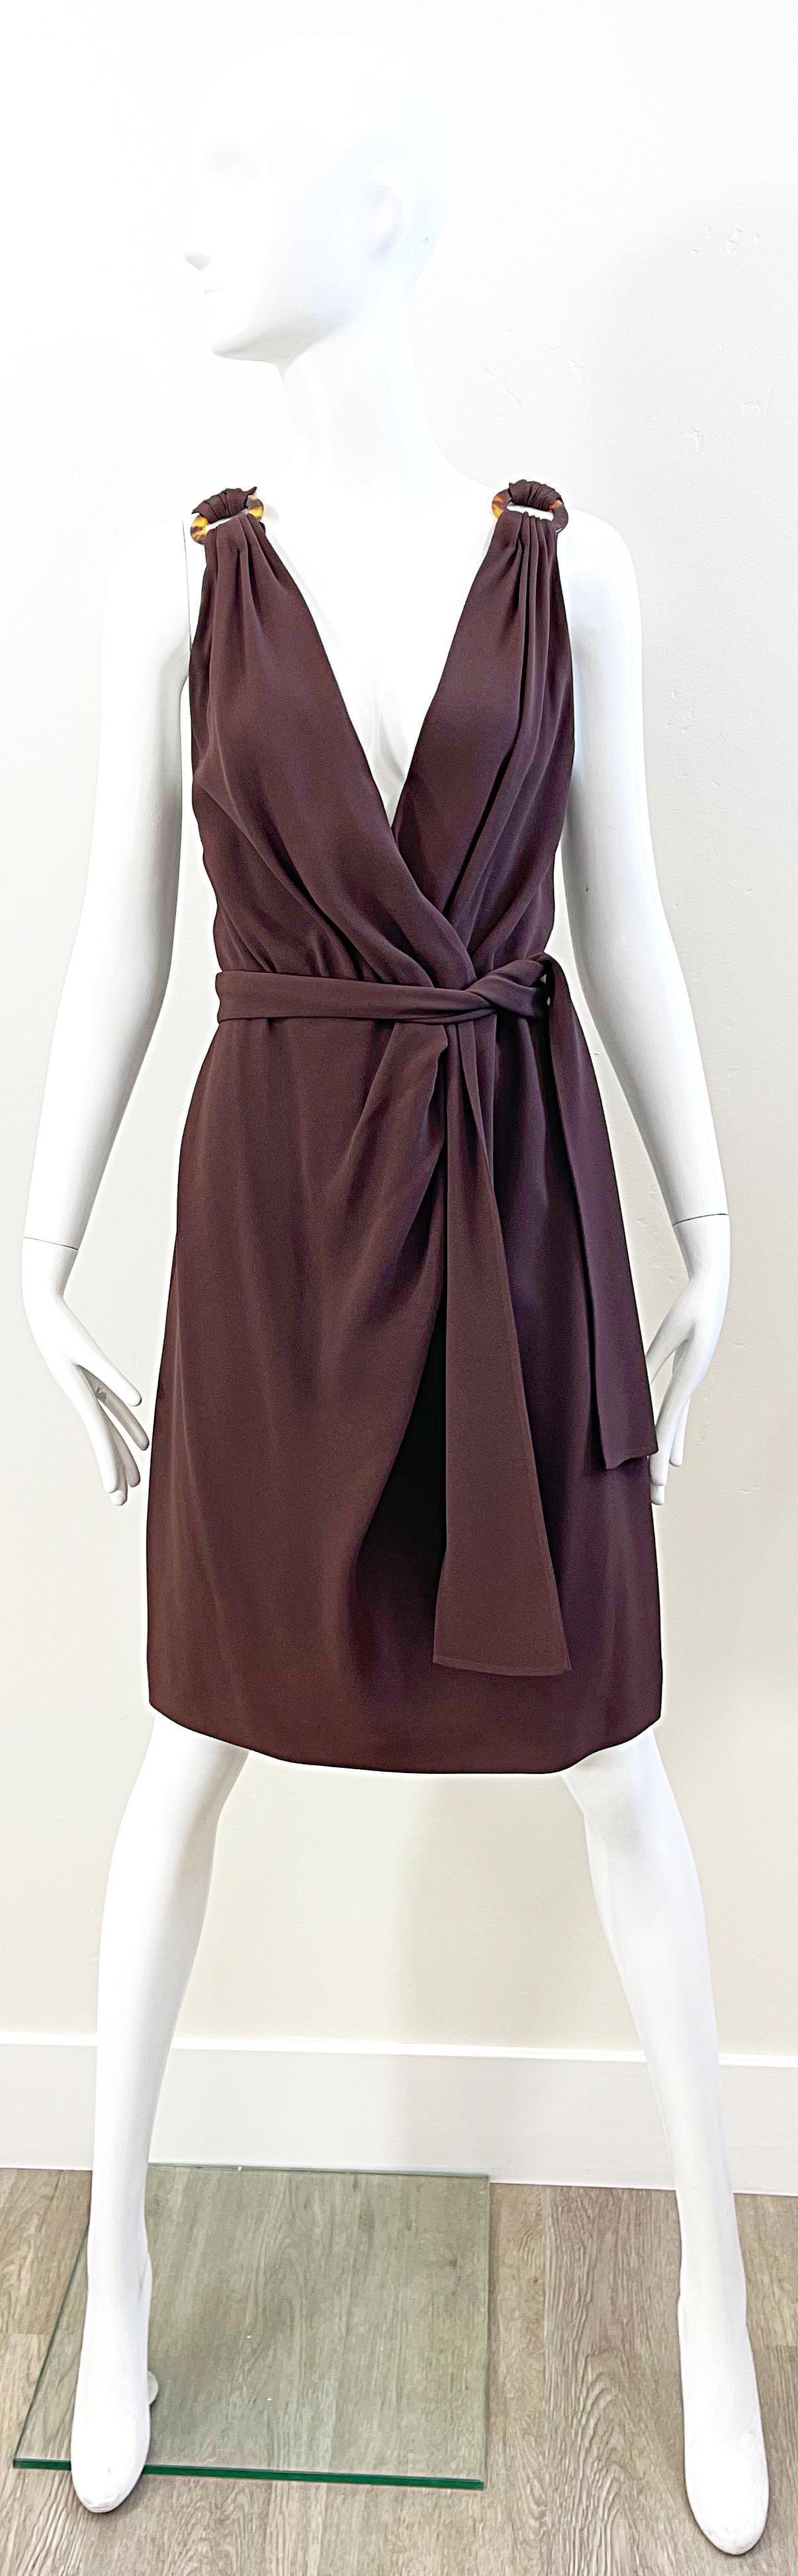 1990s Yves Saint Laurent Size 40 6 / 8 Brown Plunging Vintage 90s YSL Dress For Sale 9